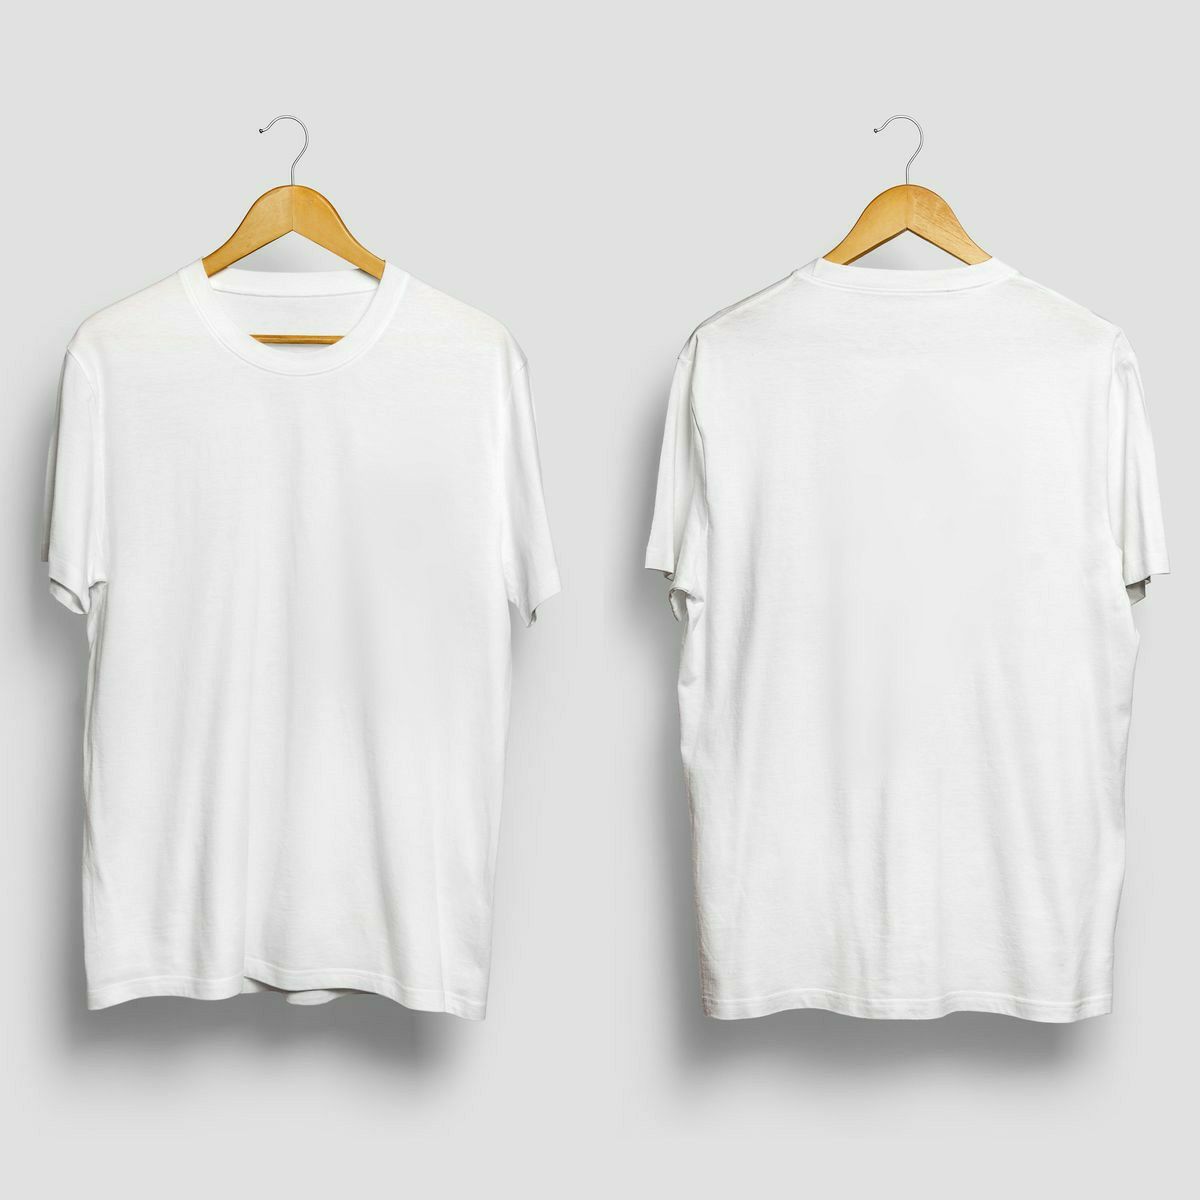 Tshirt Mockup Free, Design Kaos, T Shirt Design Template, Floral Print